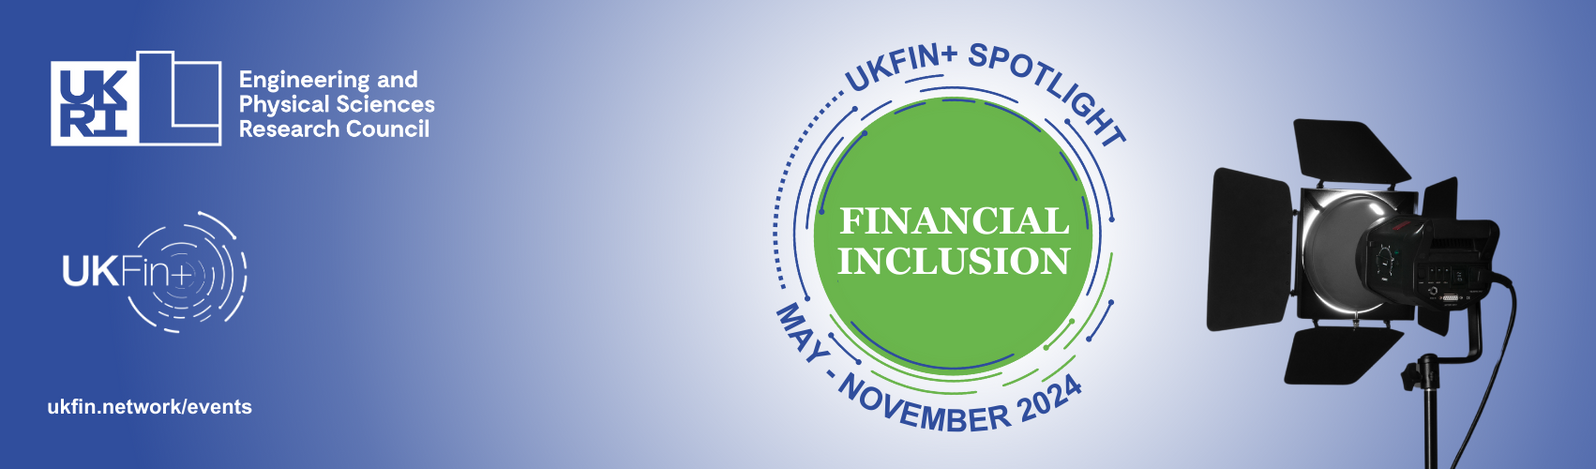 UKFin+ Financial Inclusion Spotlight banner 